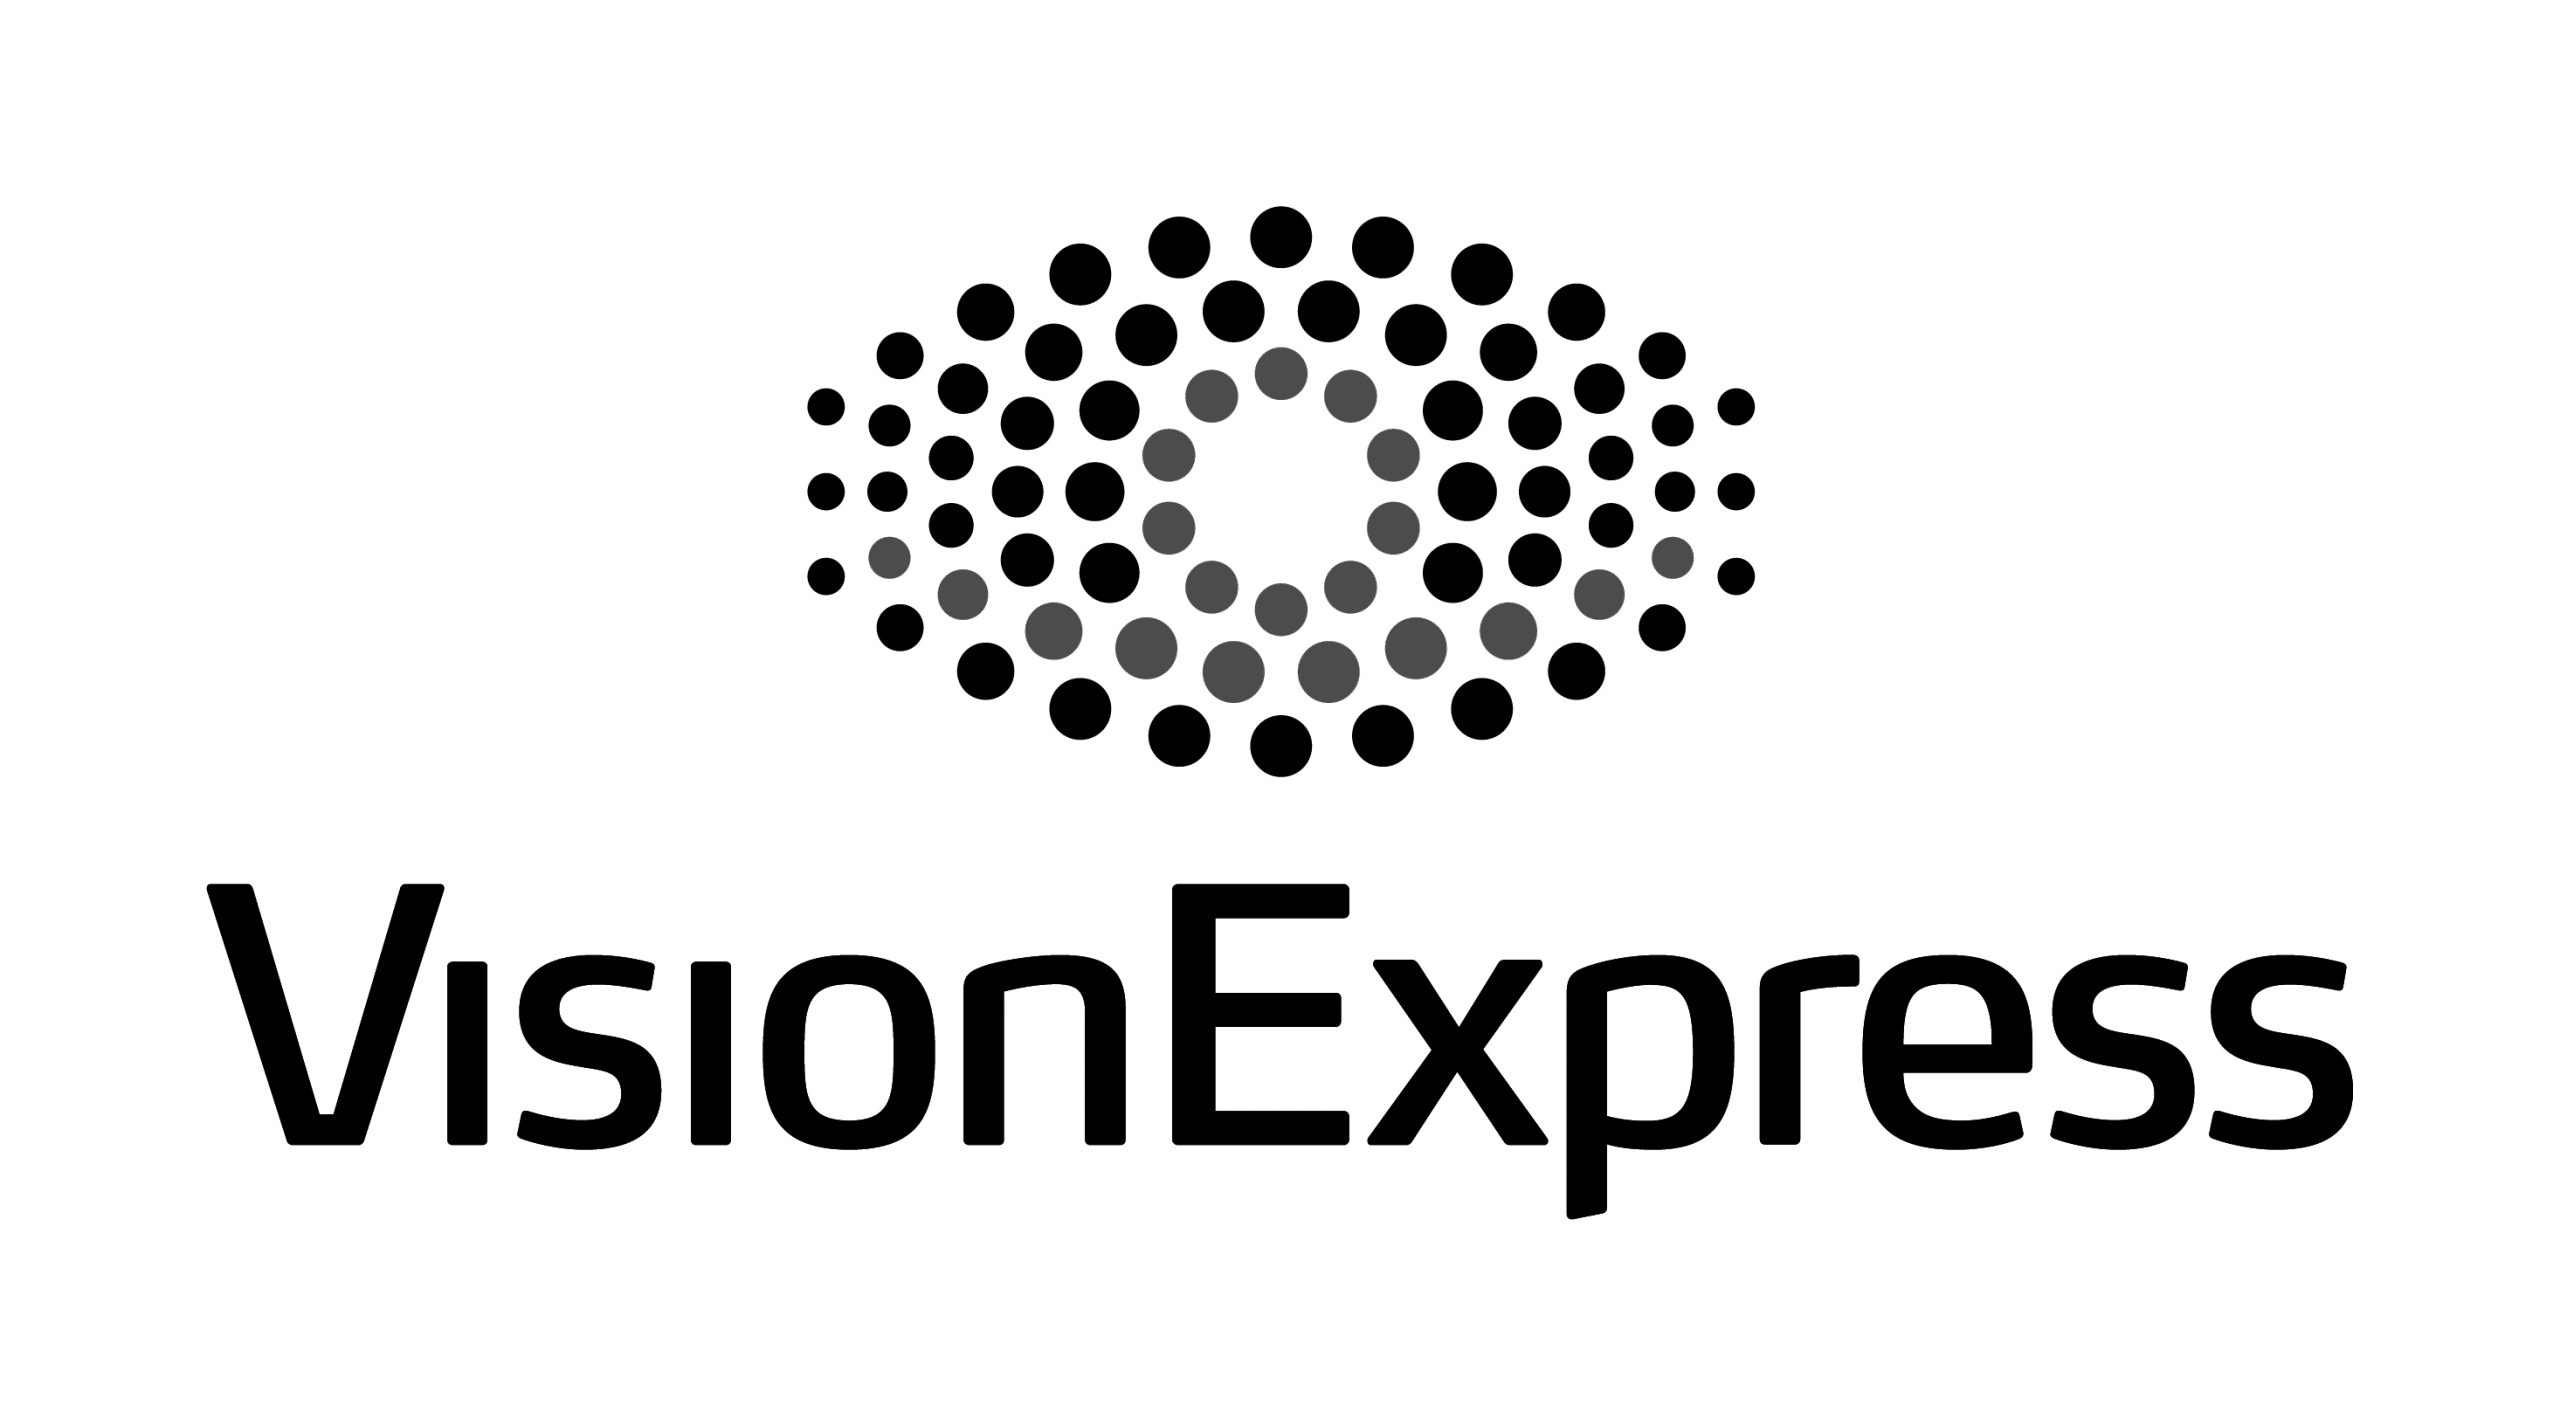 Black & White Vision Express Logo